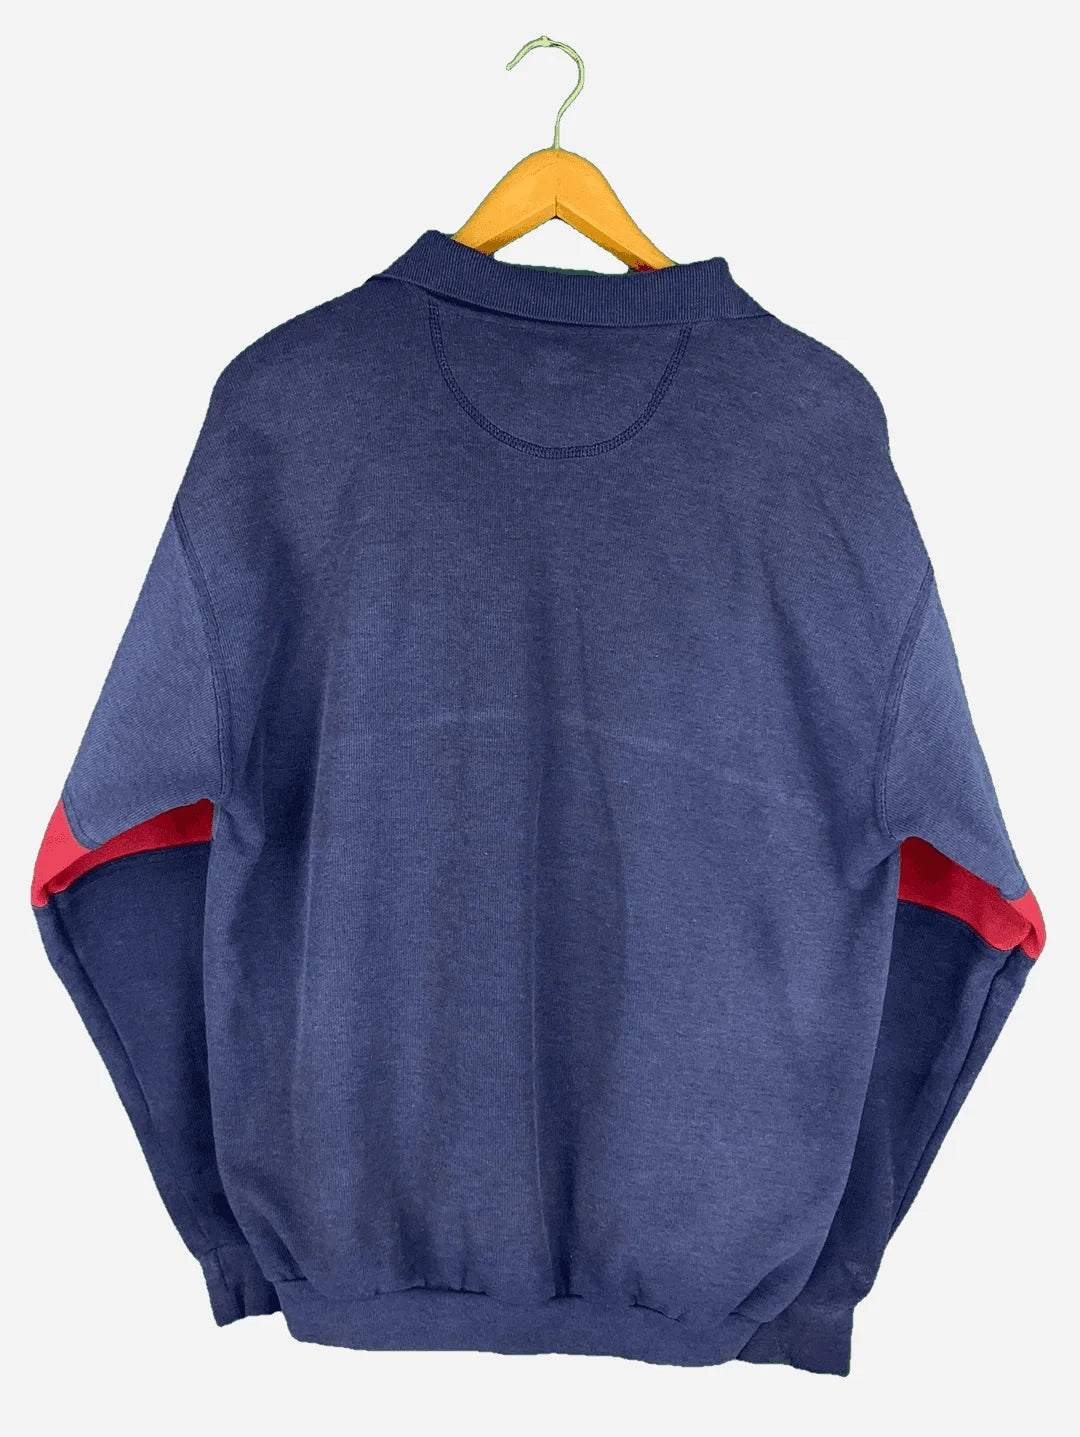 Tronci Knopf Sweater (M)